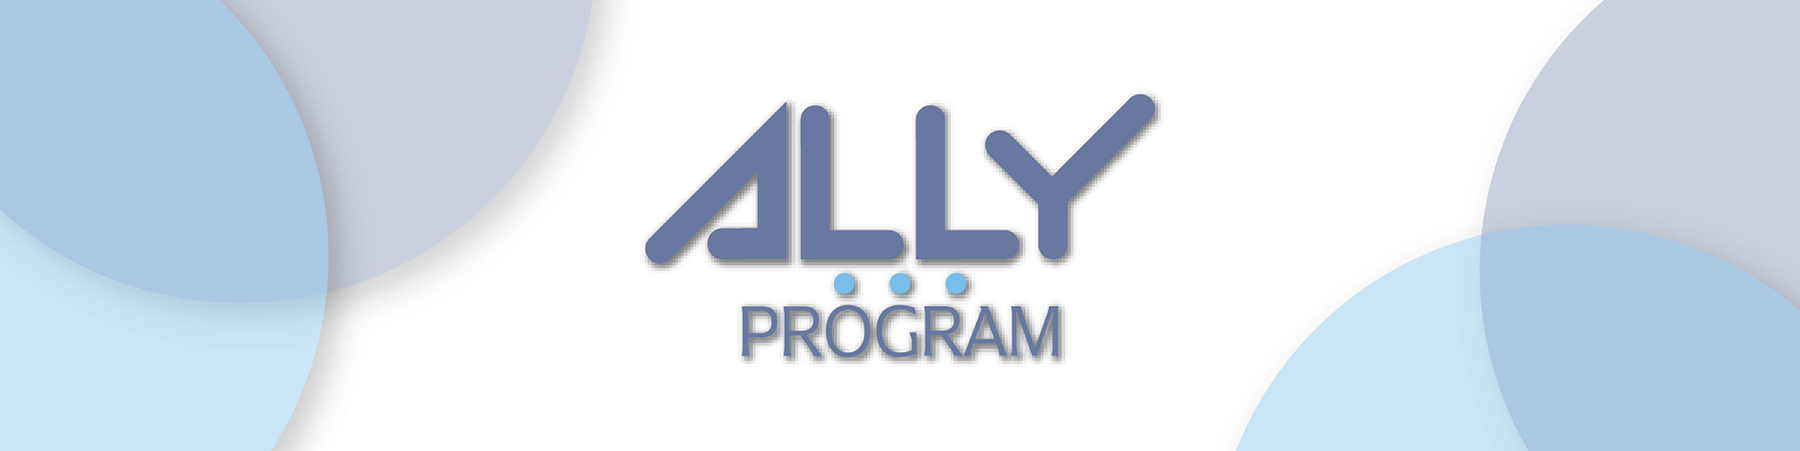 Ally Program ACEEE